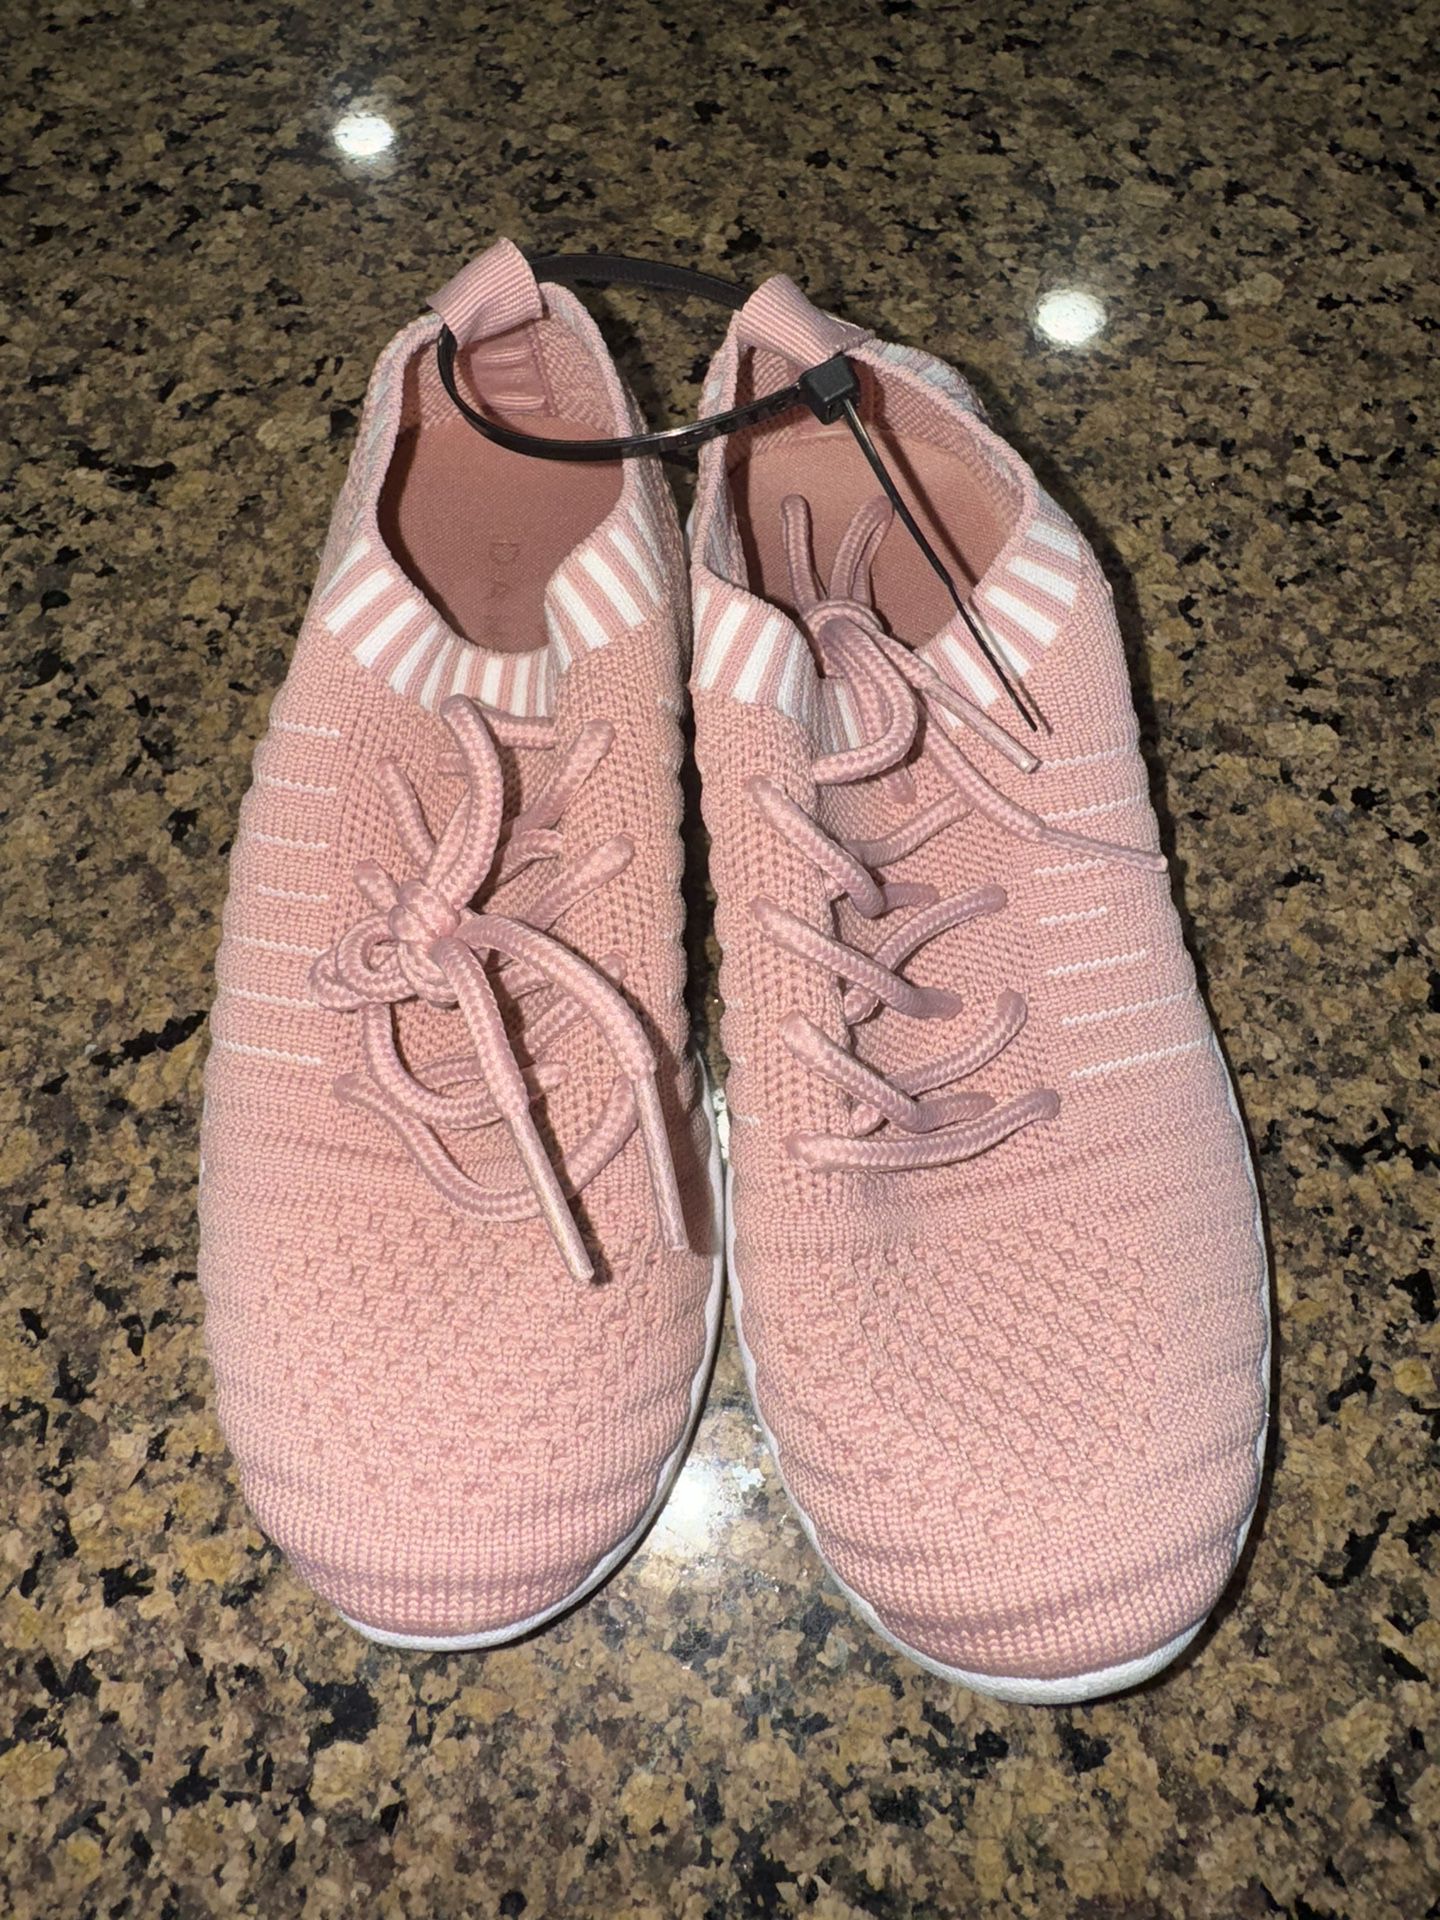 Danskin Energy-G Pink Girl Shoes Size 12